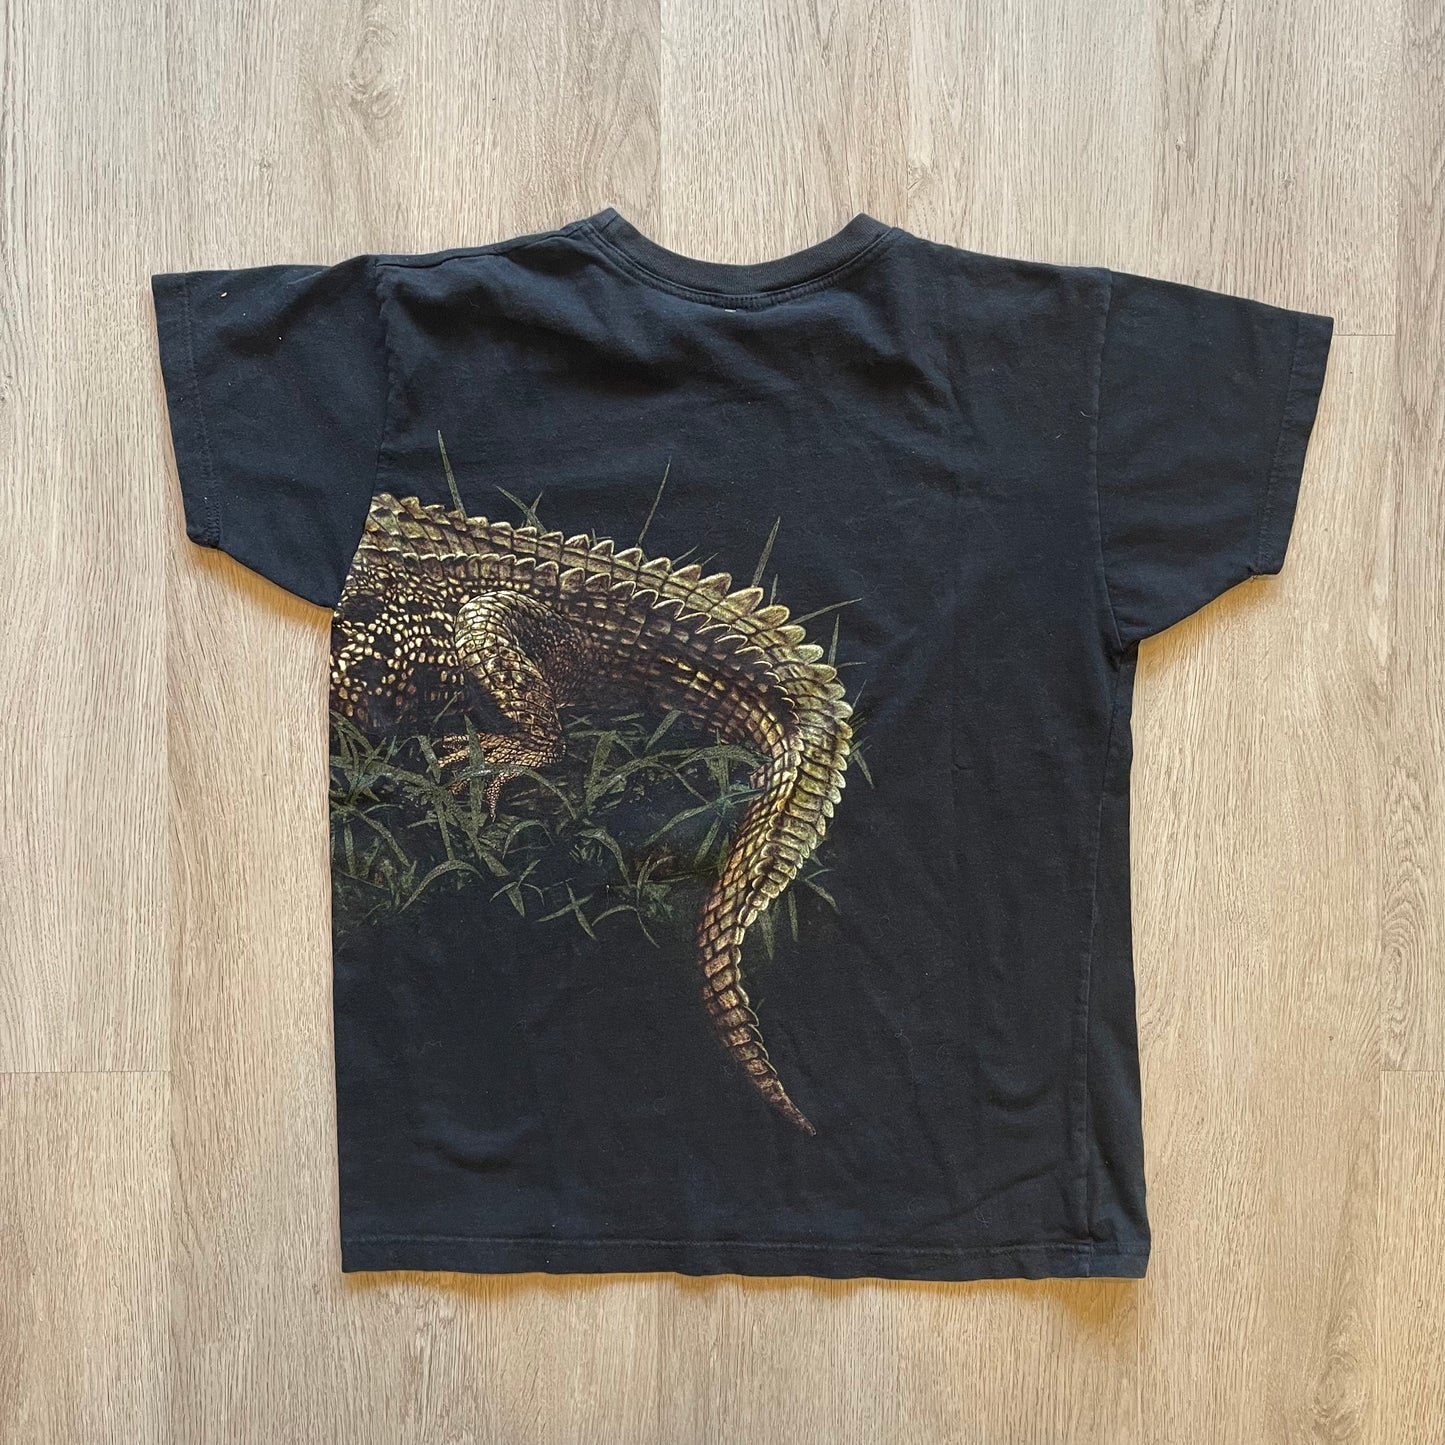 Alligator Australia vintage T-shirt